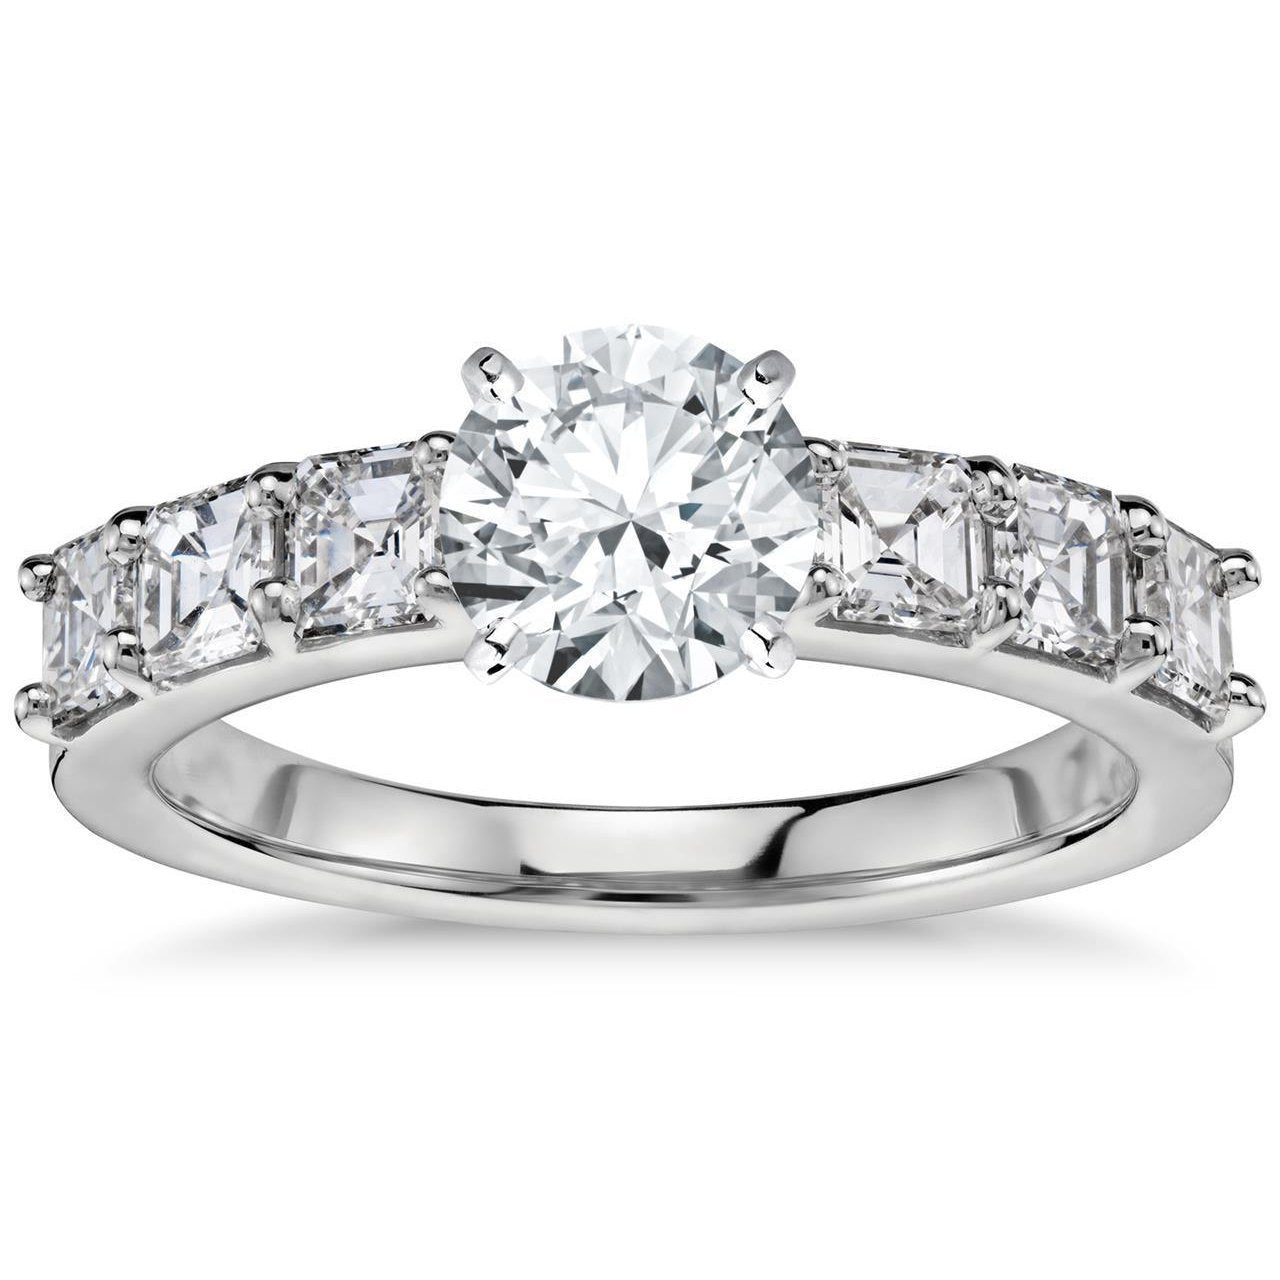 Round And Asscher Cut 4 Ct Genuine Diamonds Engagement Ring